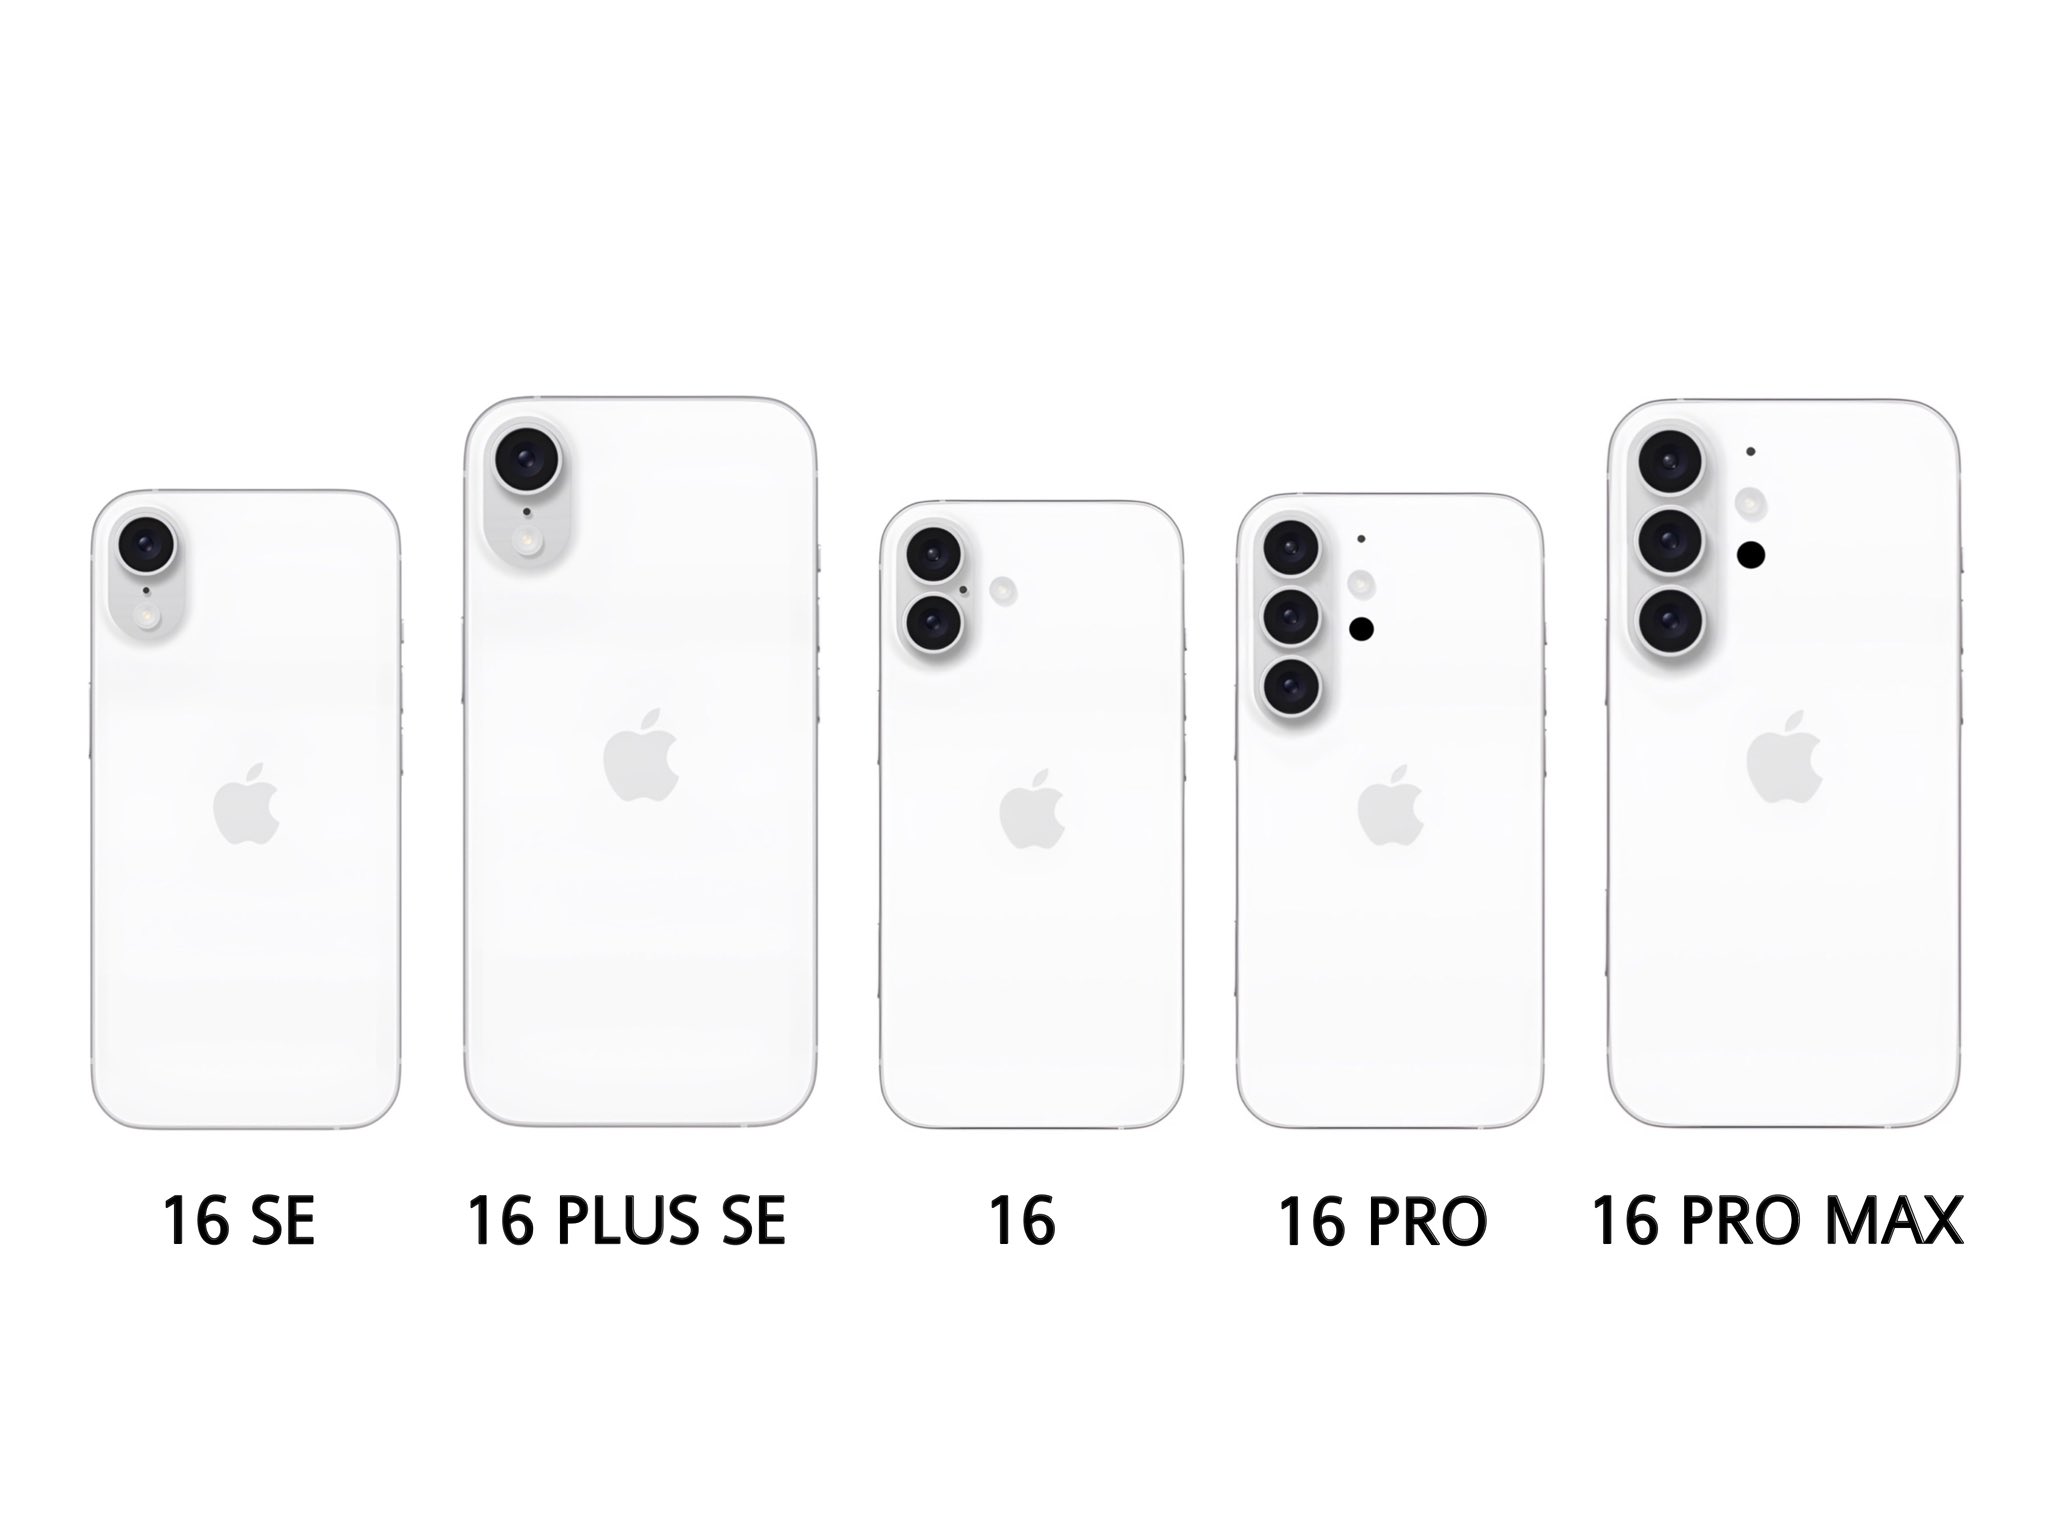 Suposta nova linha dos iPhones 16 com iPhones SE